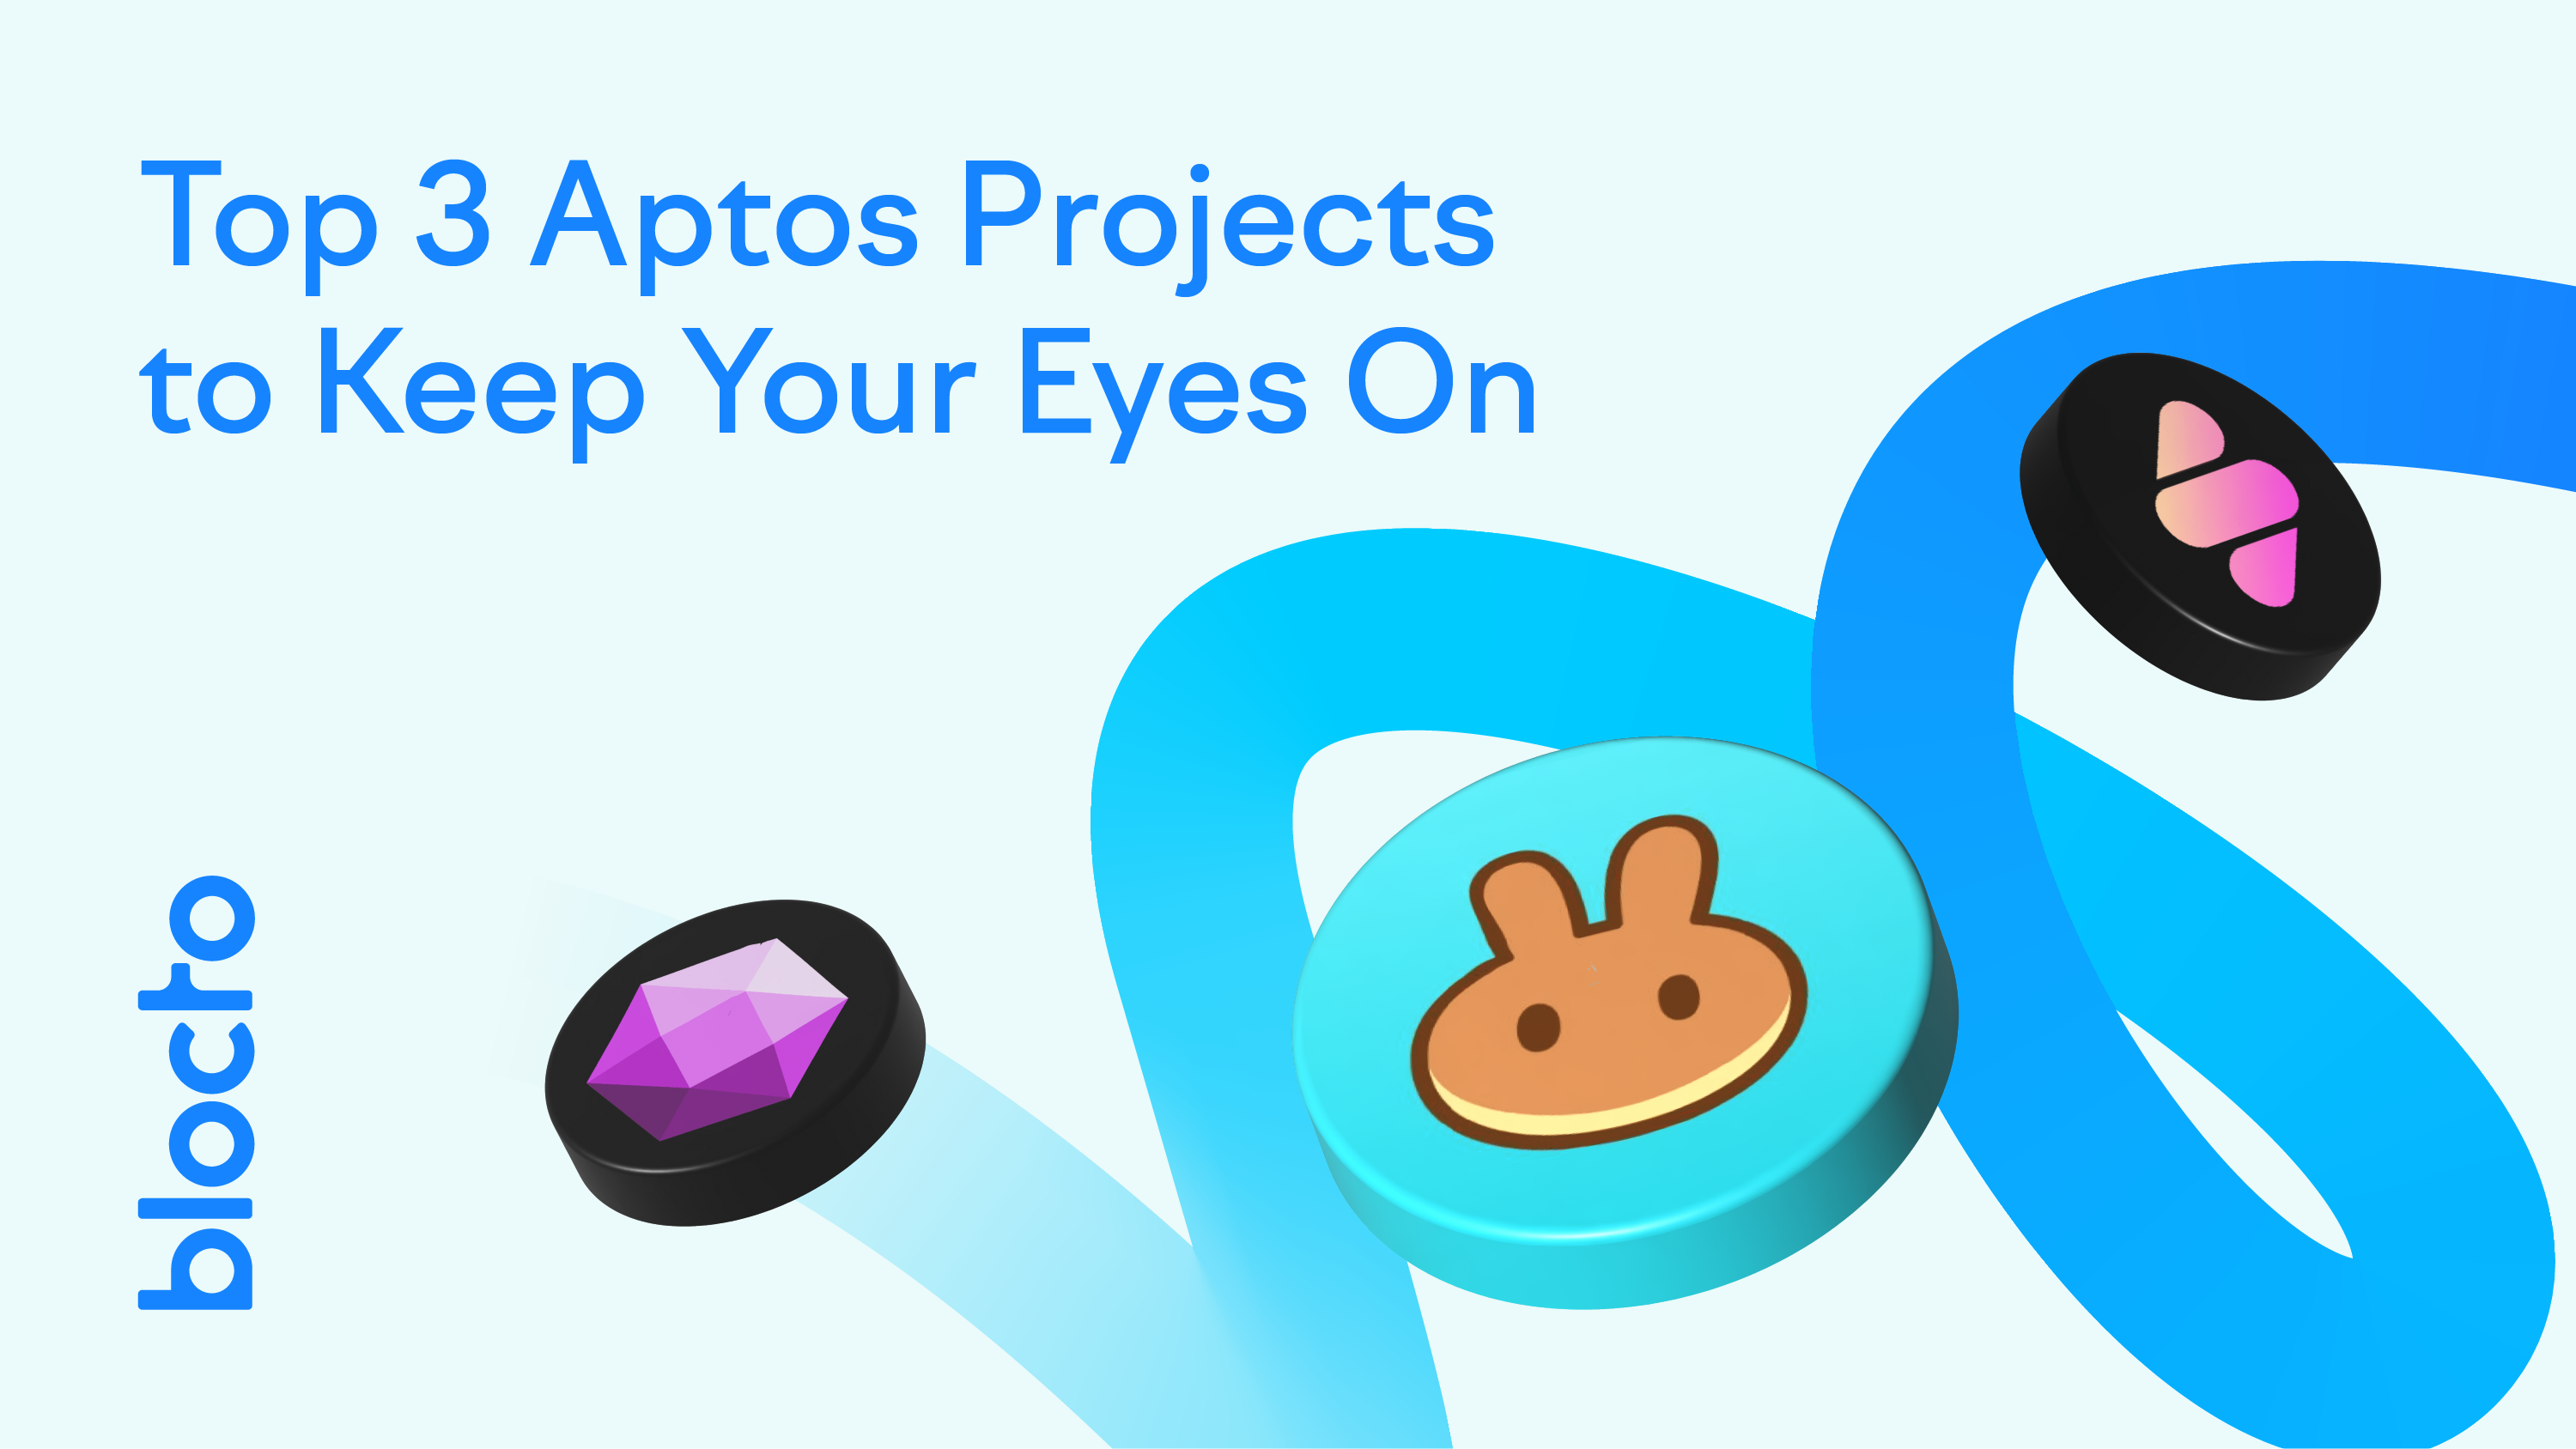 Top 3 Aptos Projects: Souffl3, PancakeSwap, and Topaz